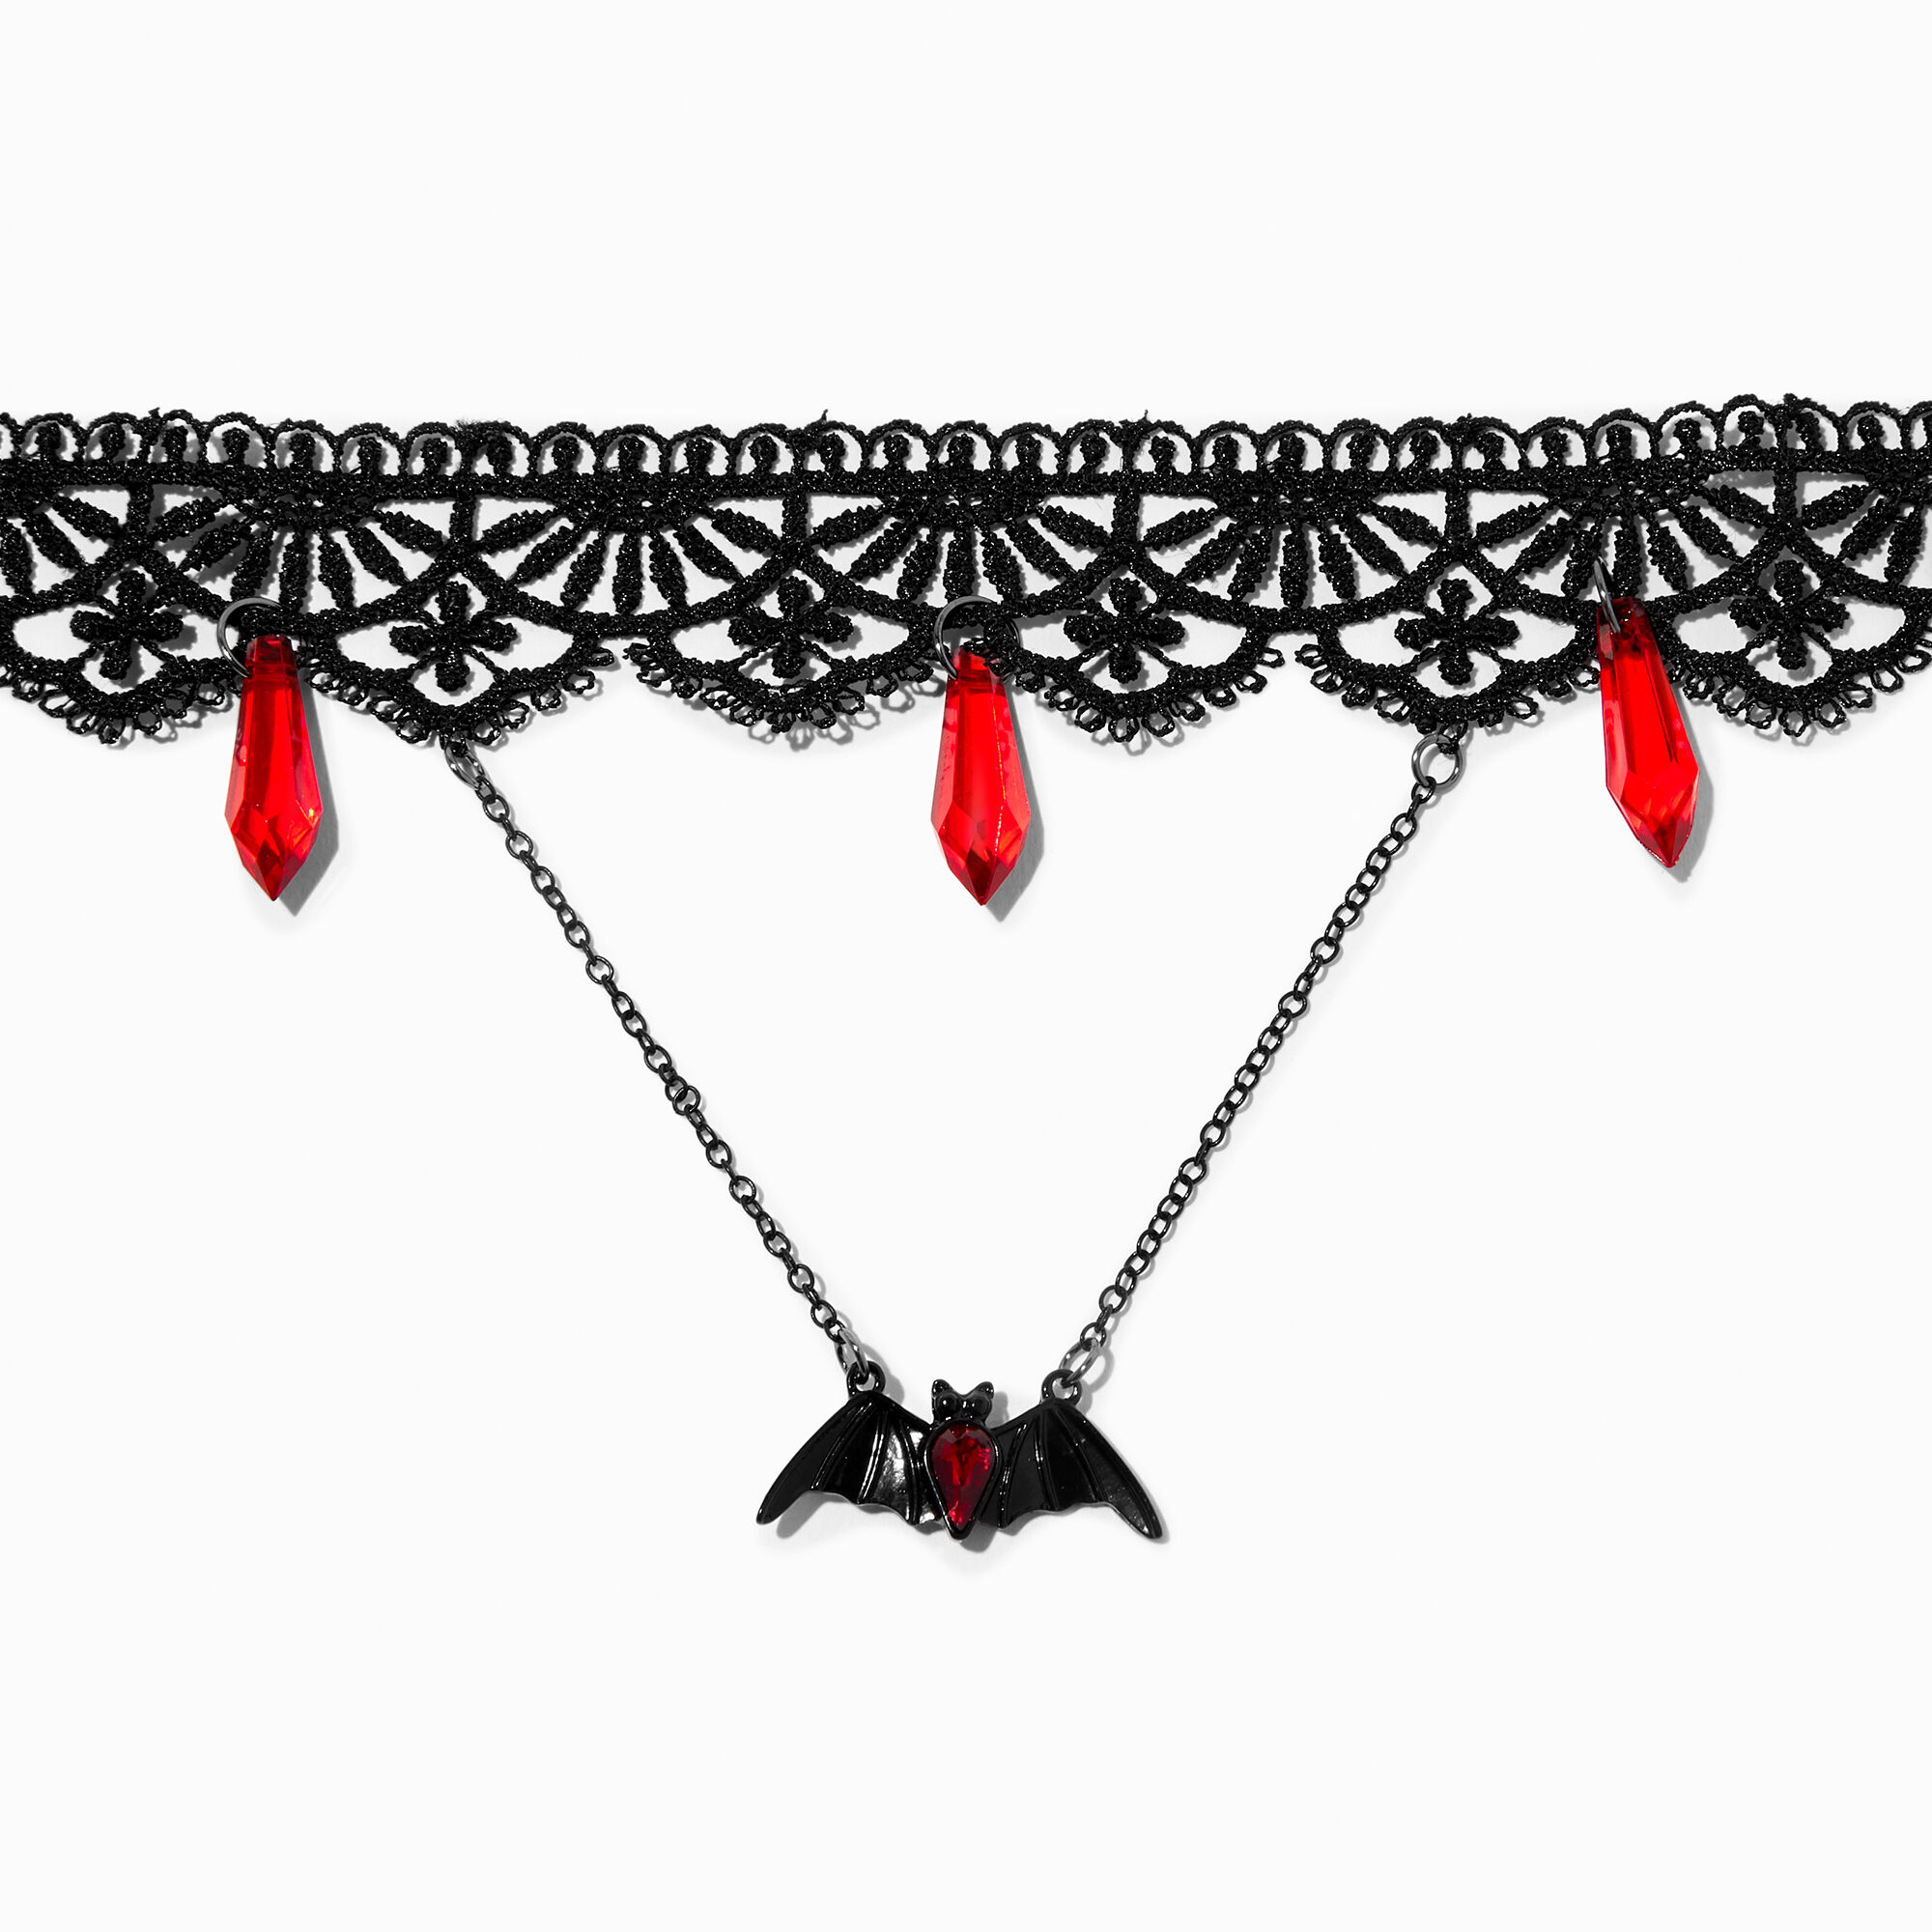 View Claires Halloween Bat Lace Choker Necklace Black information